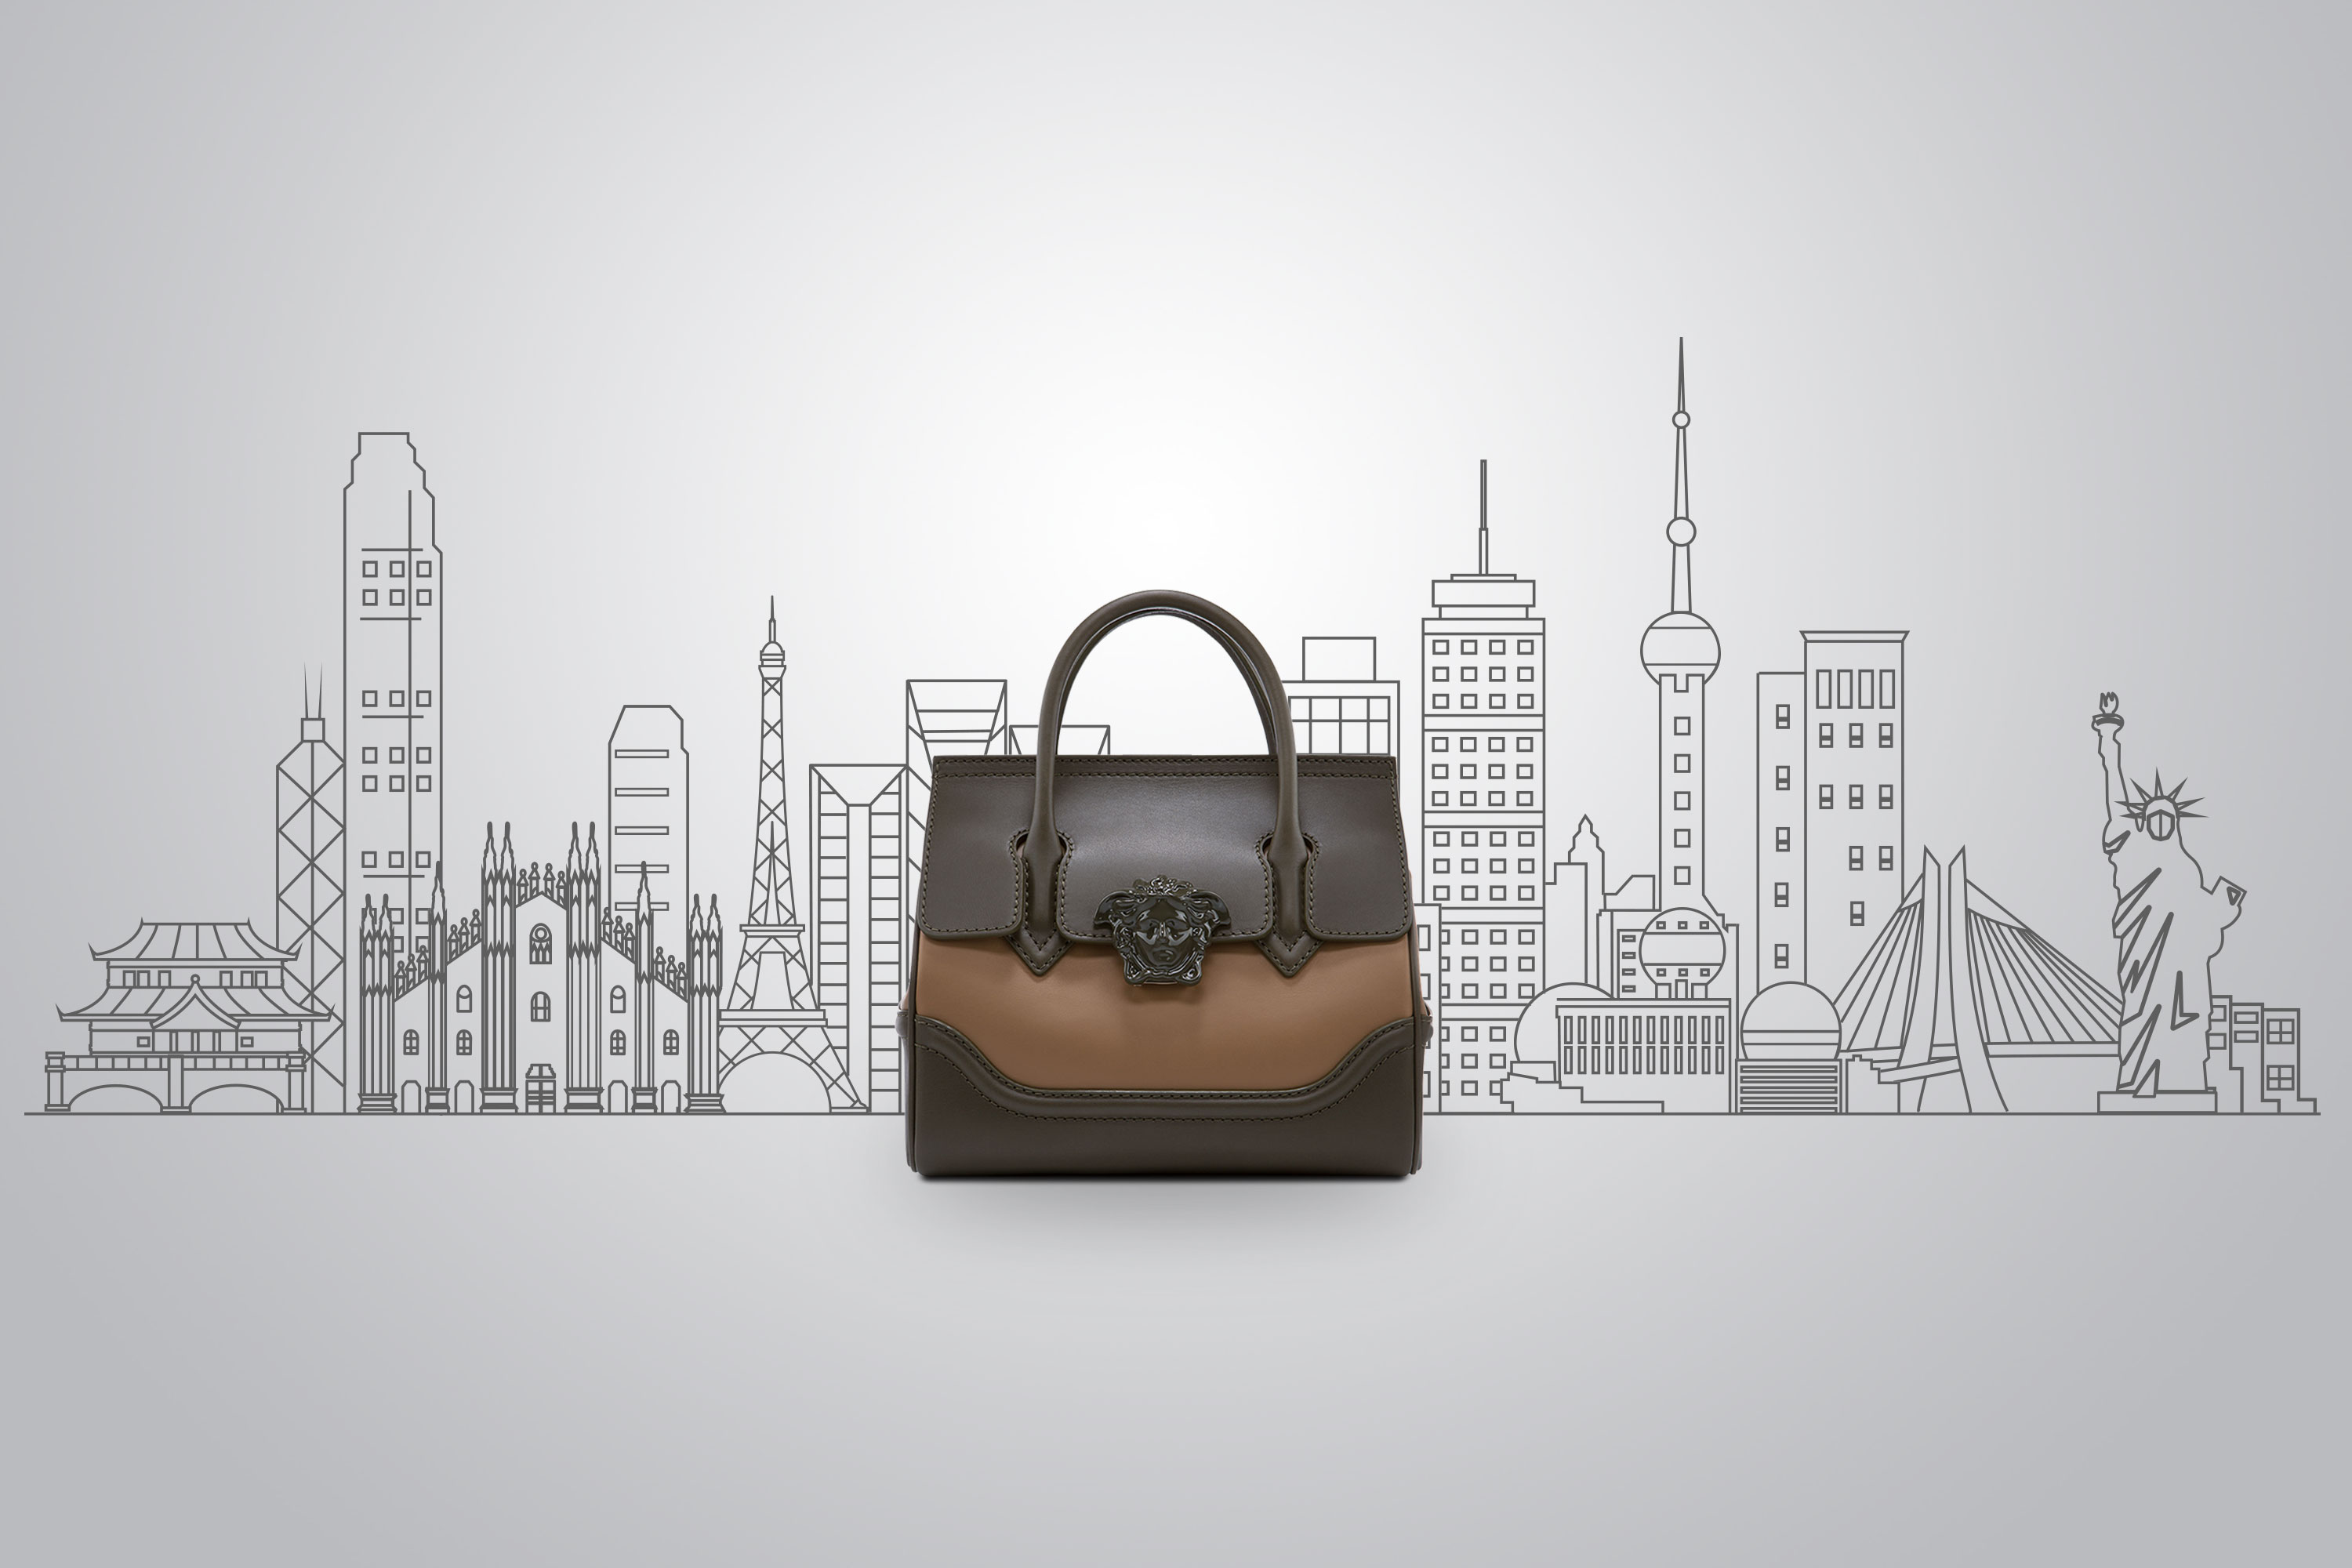 Versace оголосили конкурс «7 сумок – 7 міст»-320x180